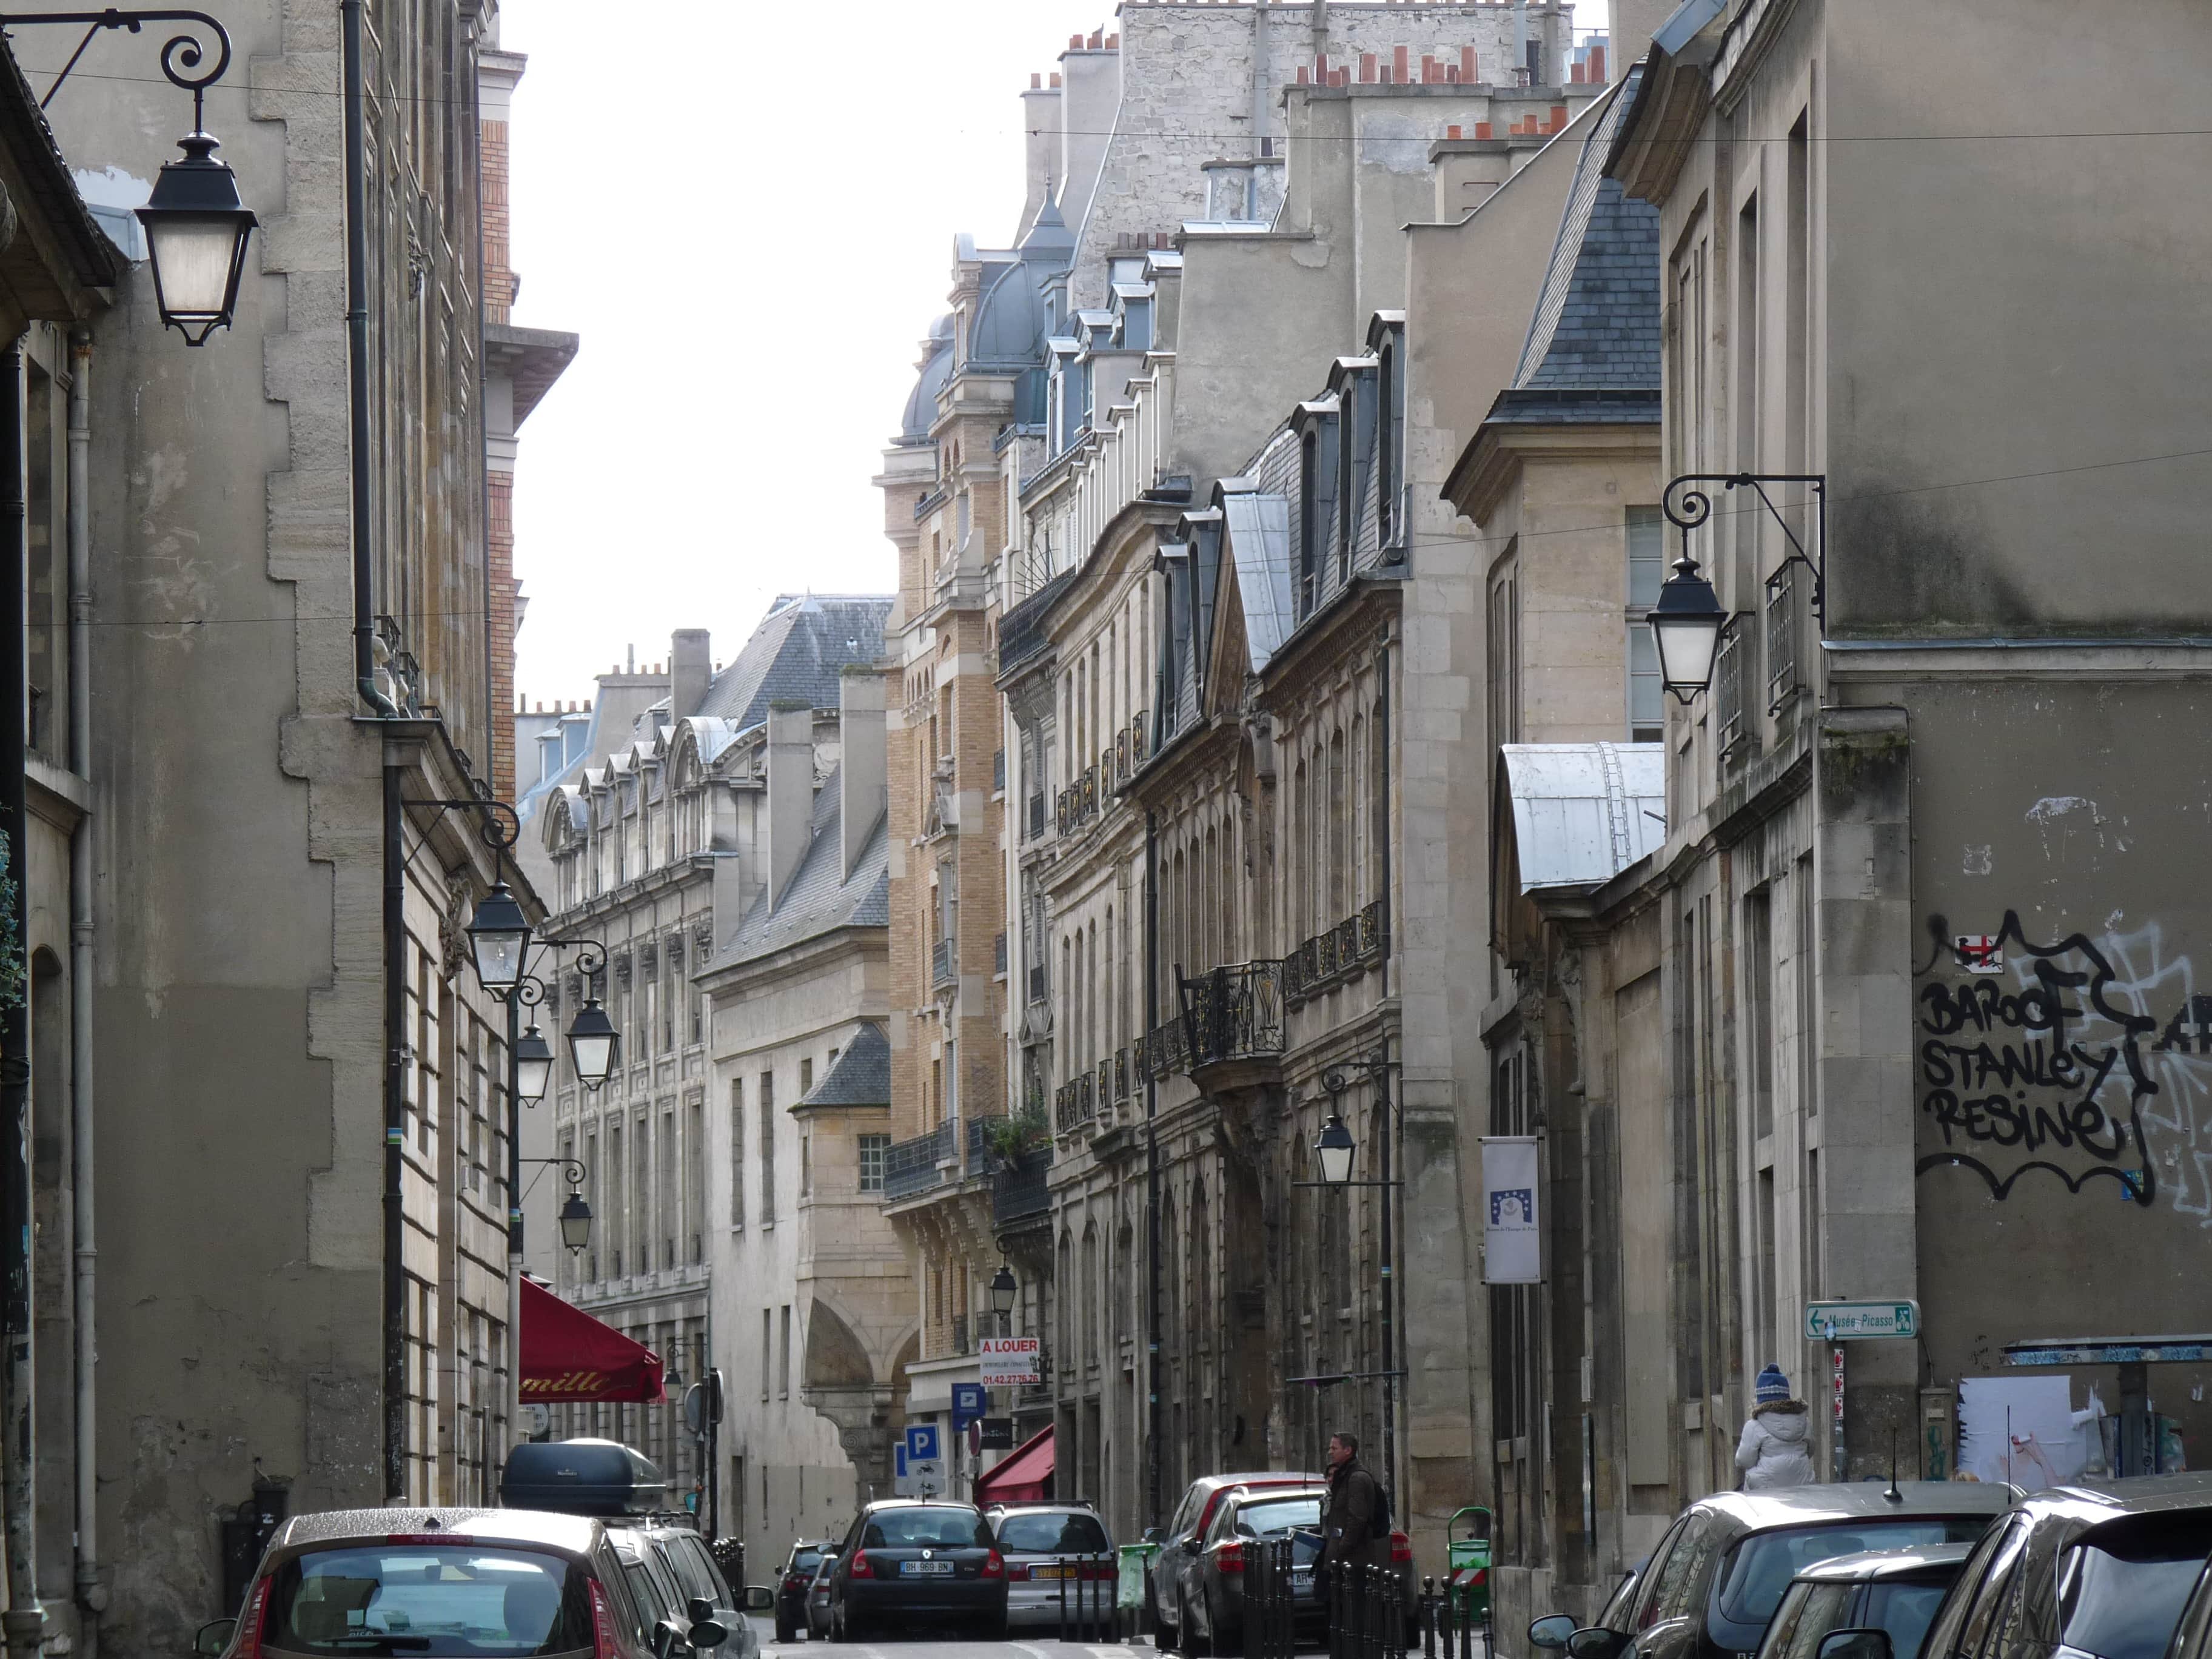 rue francs bourgeois near 9 hotel confidentiel